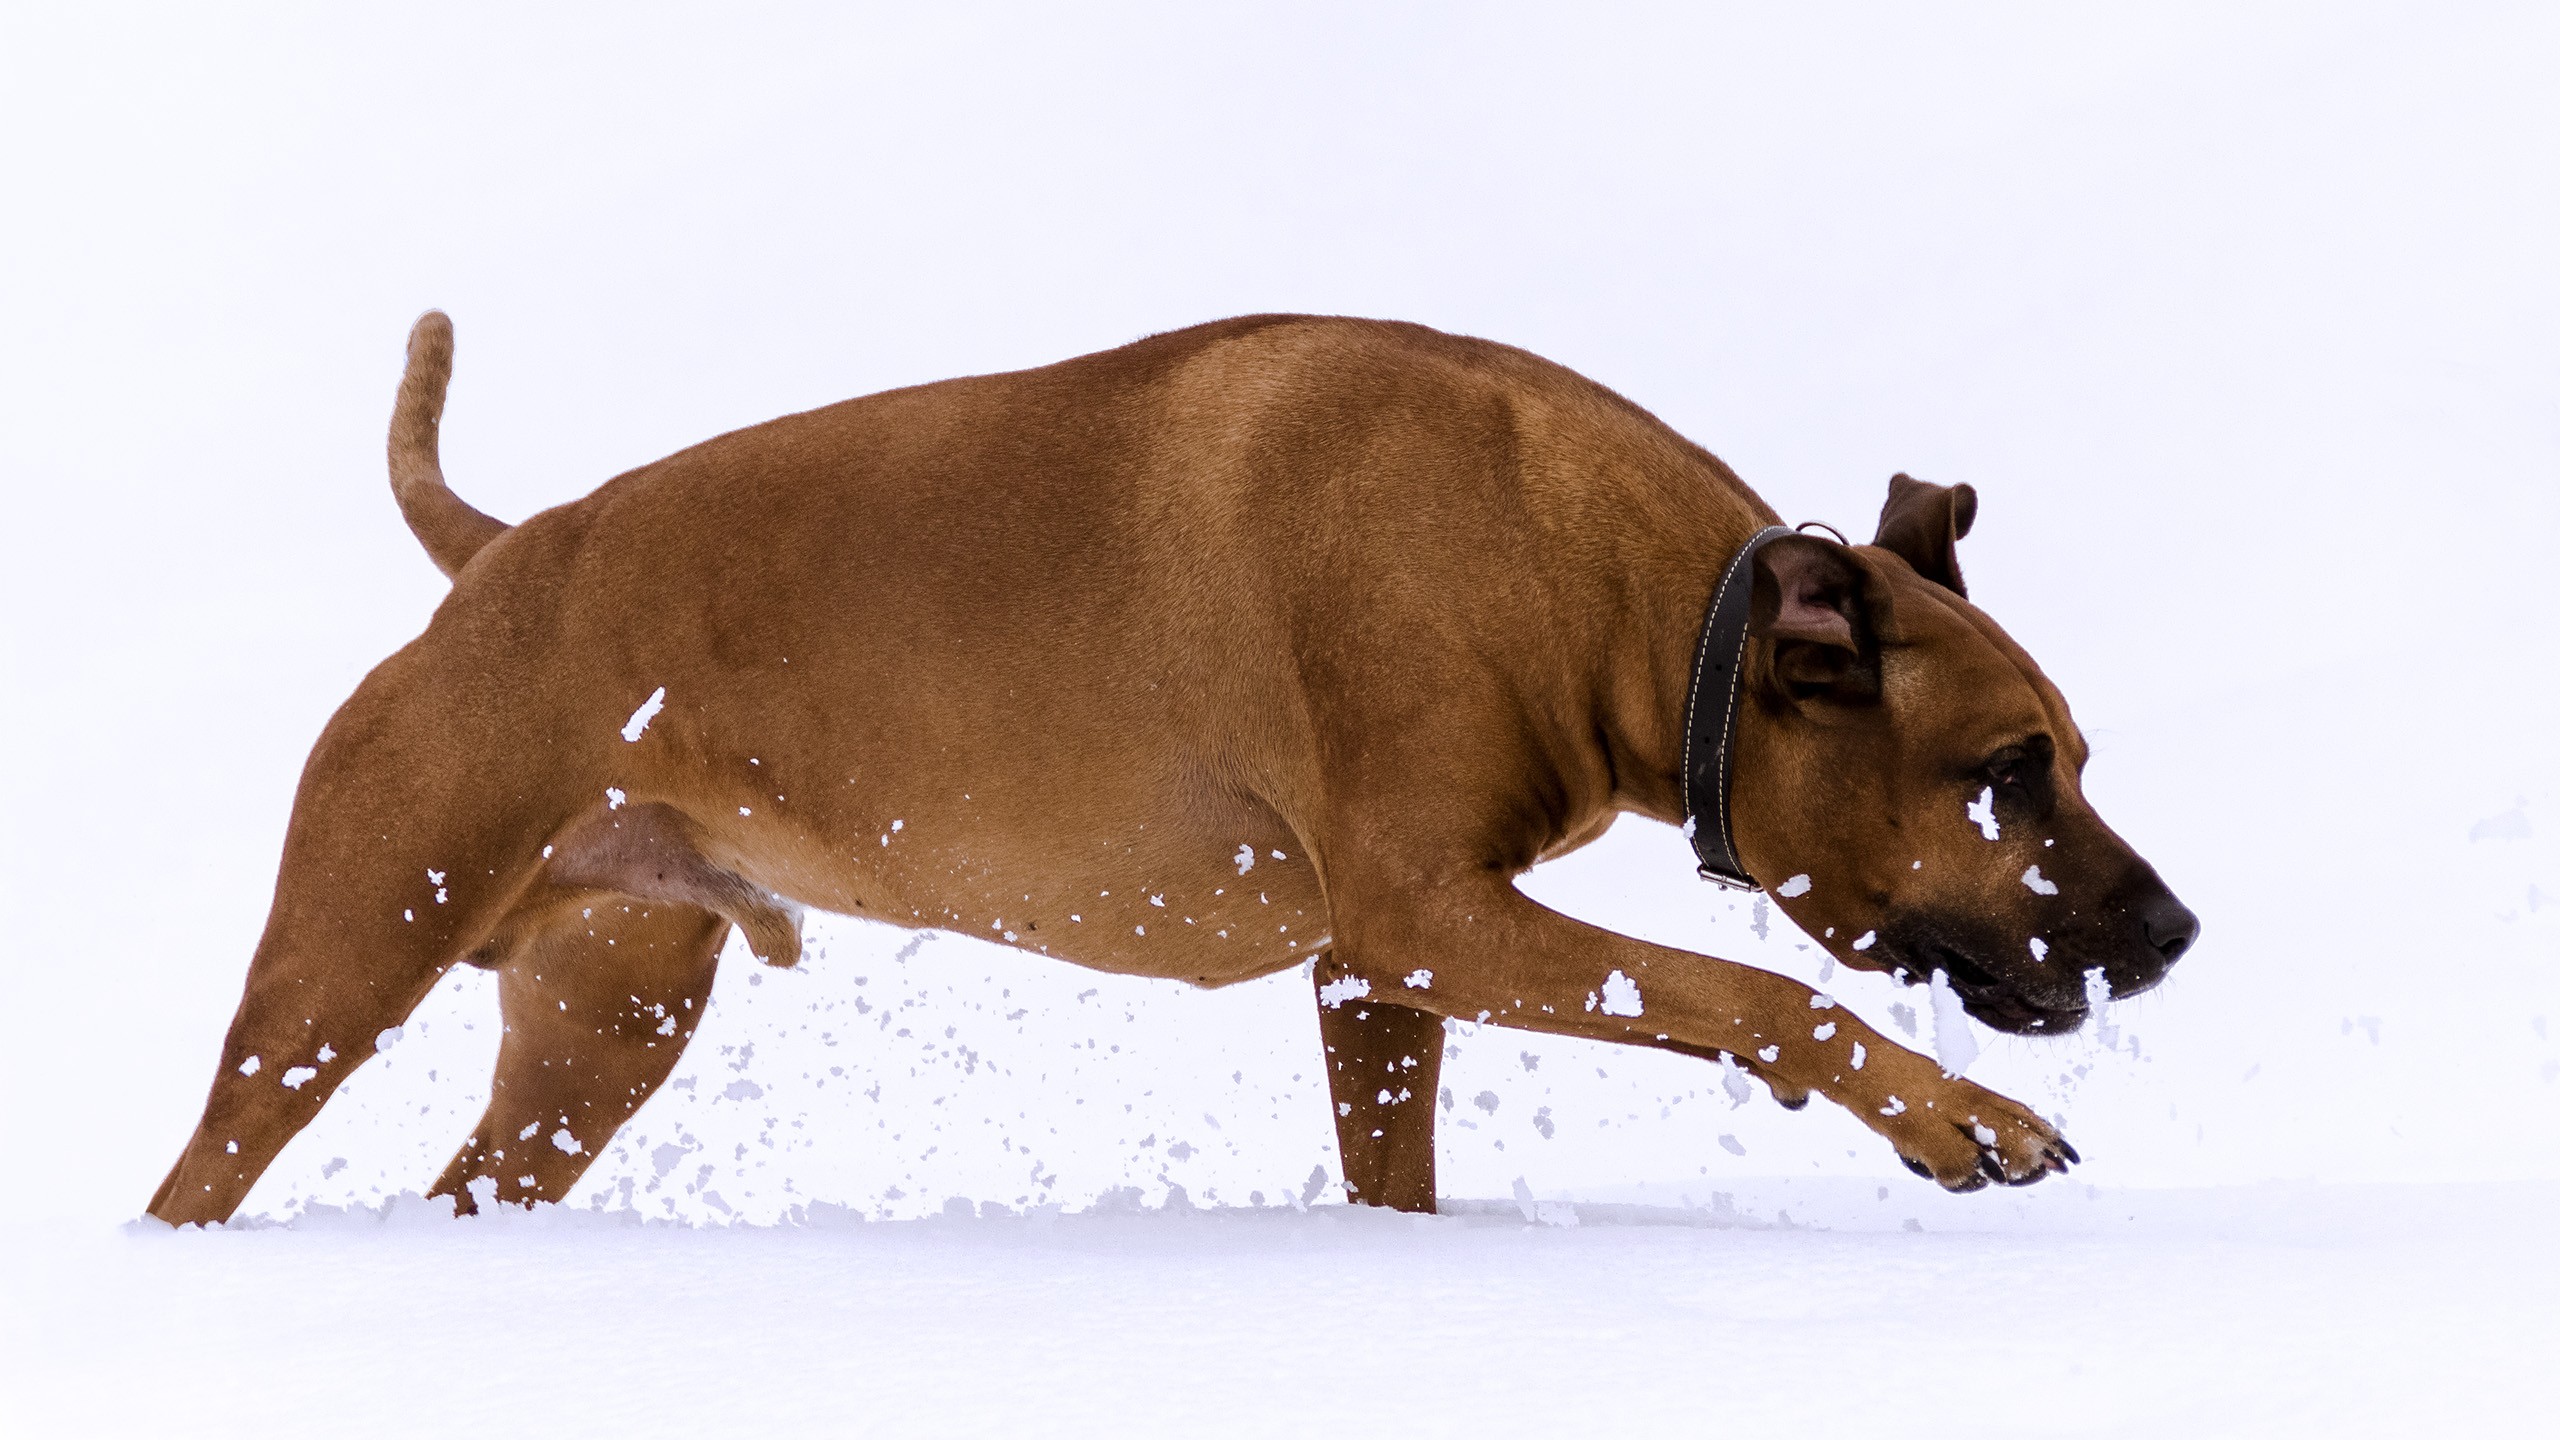 General 2560x1440 running snow animals dog rhodesian ridgeback collar mammals winter white background